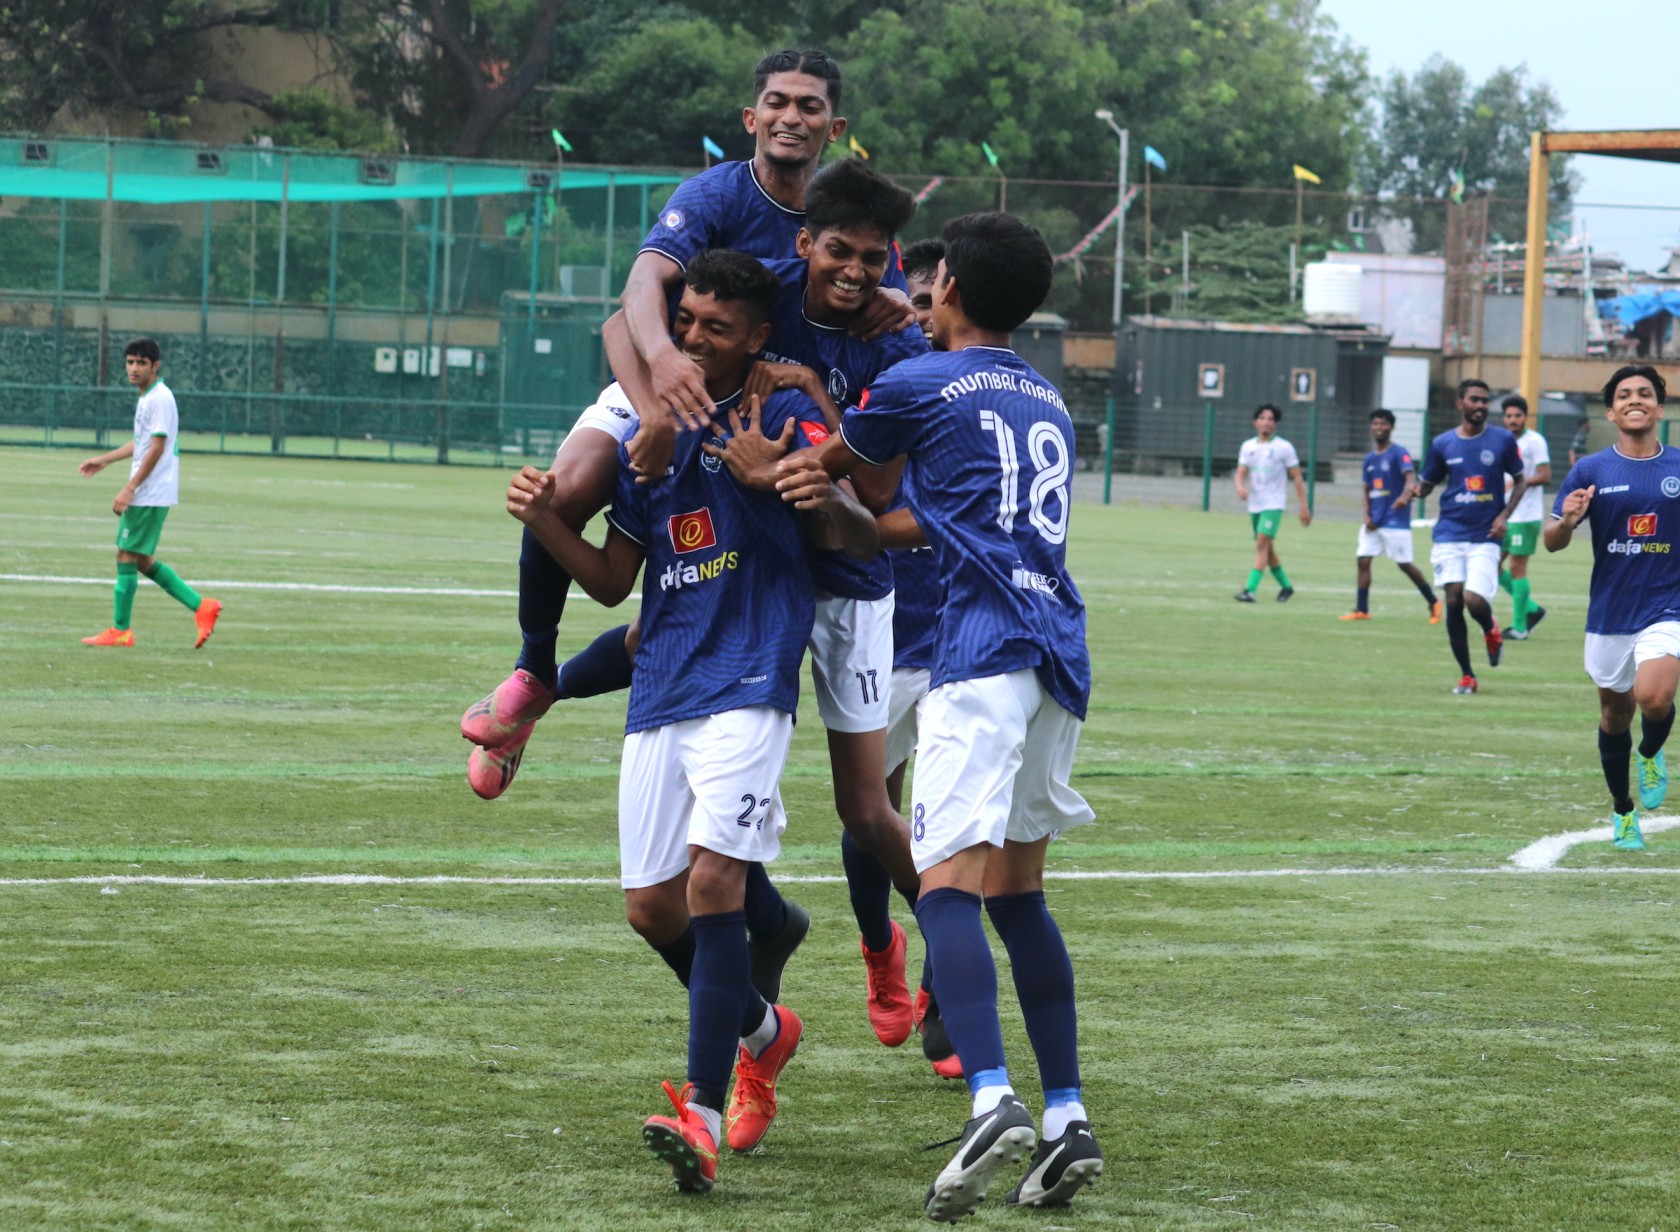 Mumbai Marines FC get back to winning ways, seal a 3-0 win over Skorost United FC